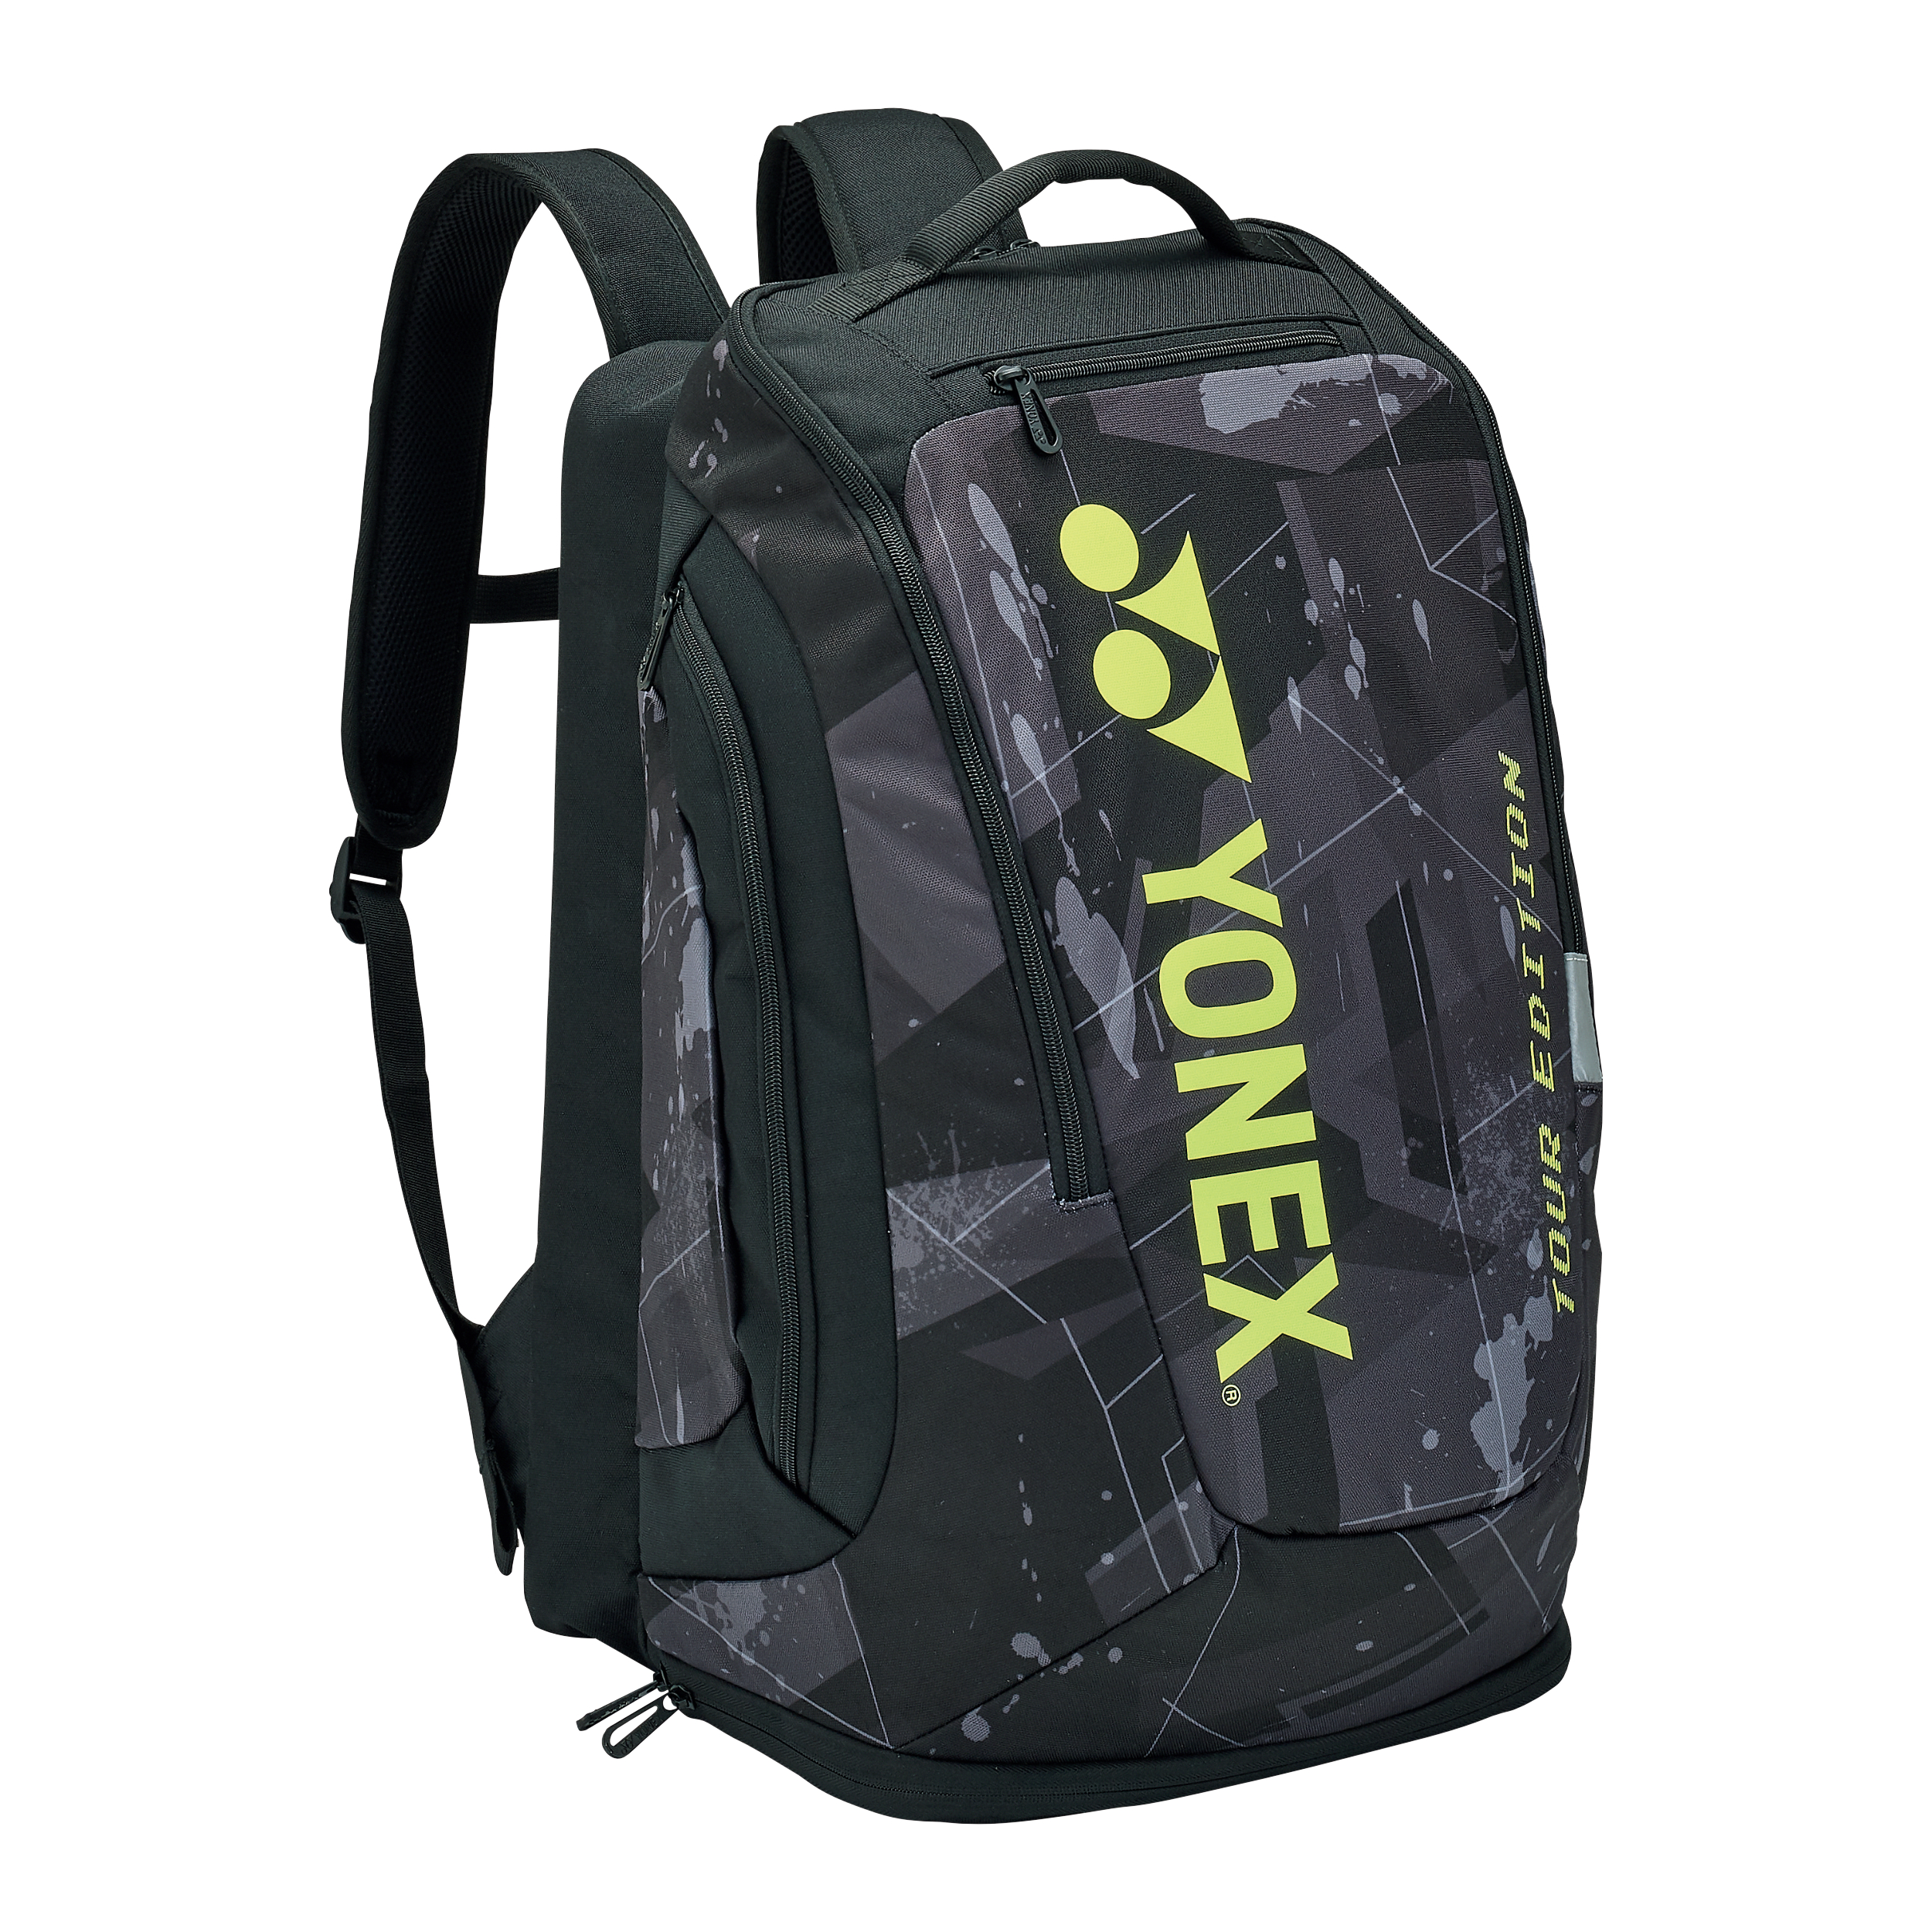 Yonex Pro Backpack 92012 Badminton Squash Tennis Black/Yellow